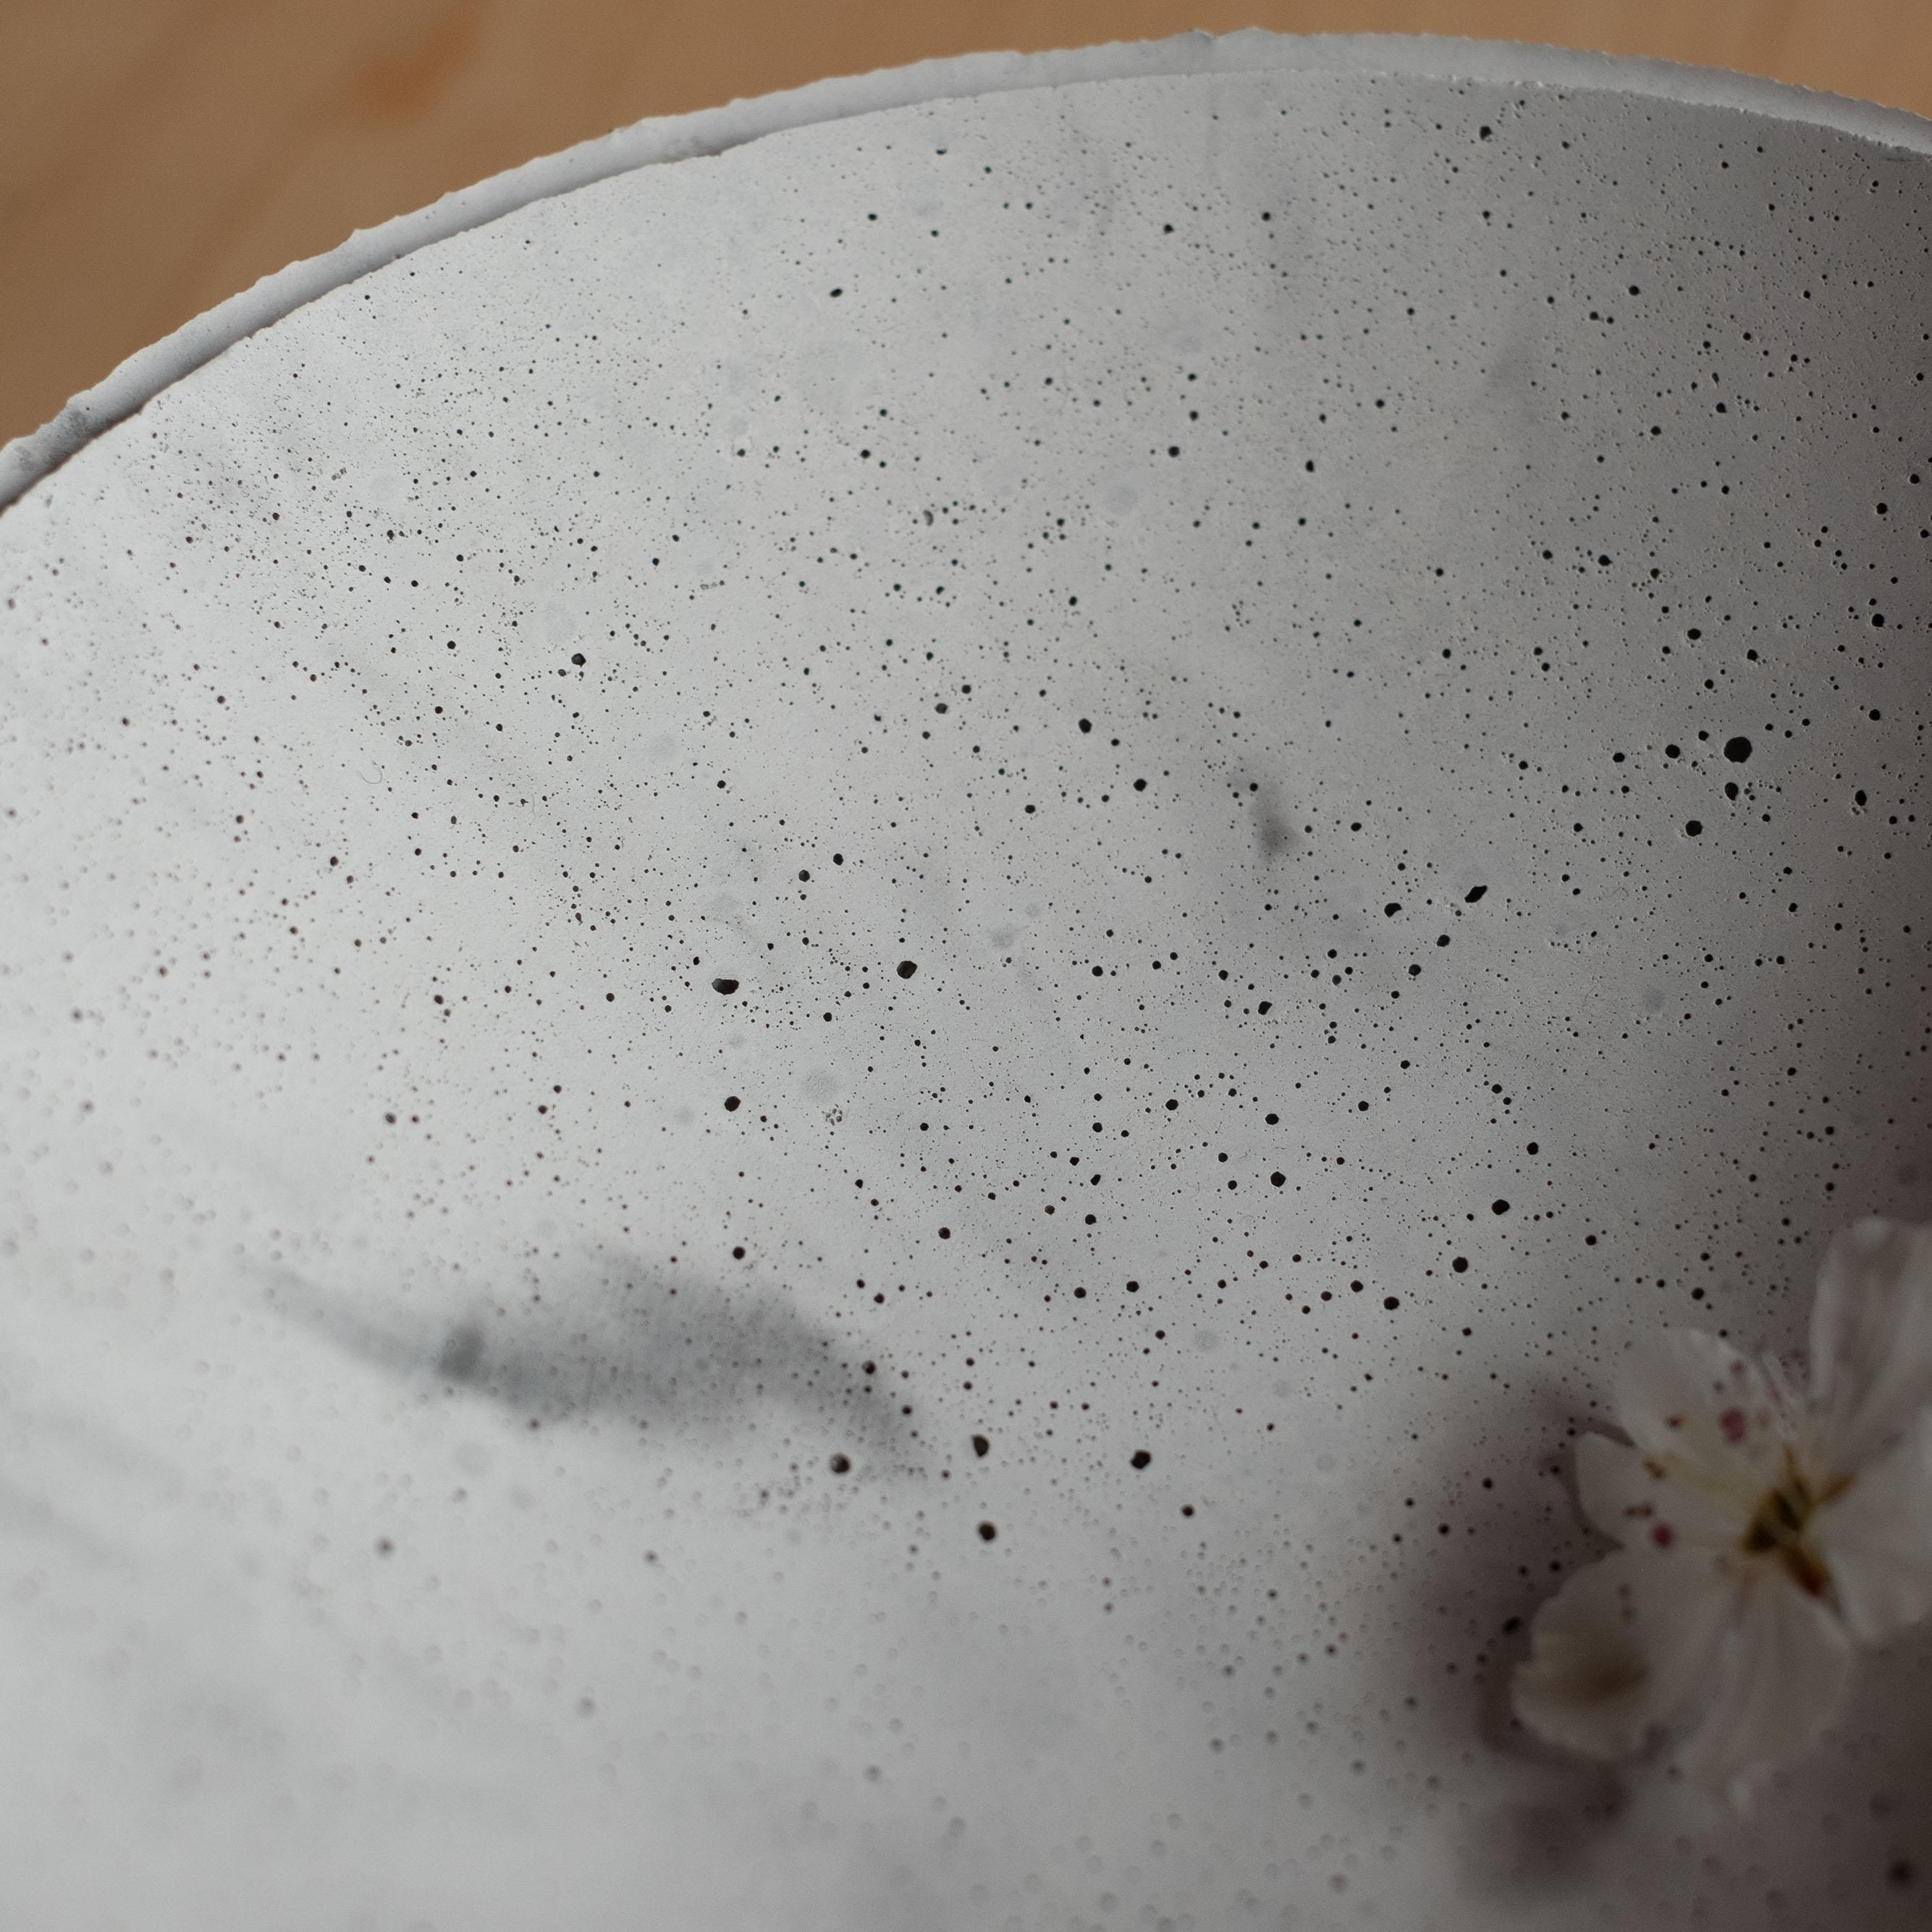 Handmade Cast Concrete Bowl in Grey by Umé Studio For Sale 6